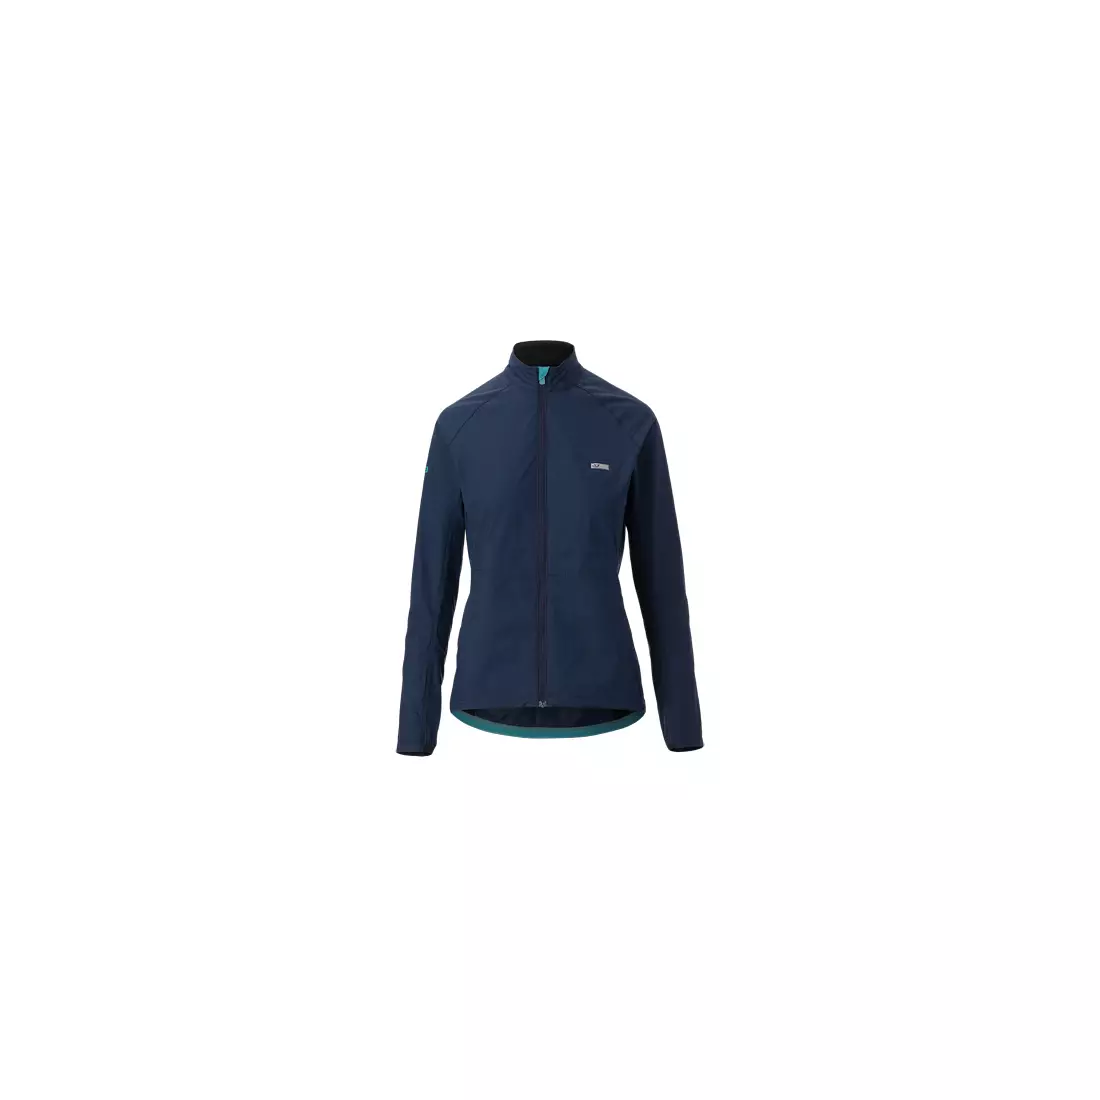 GIRO jachetă de vânt pentru femei stow midnight blue GR-7106744